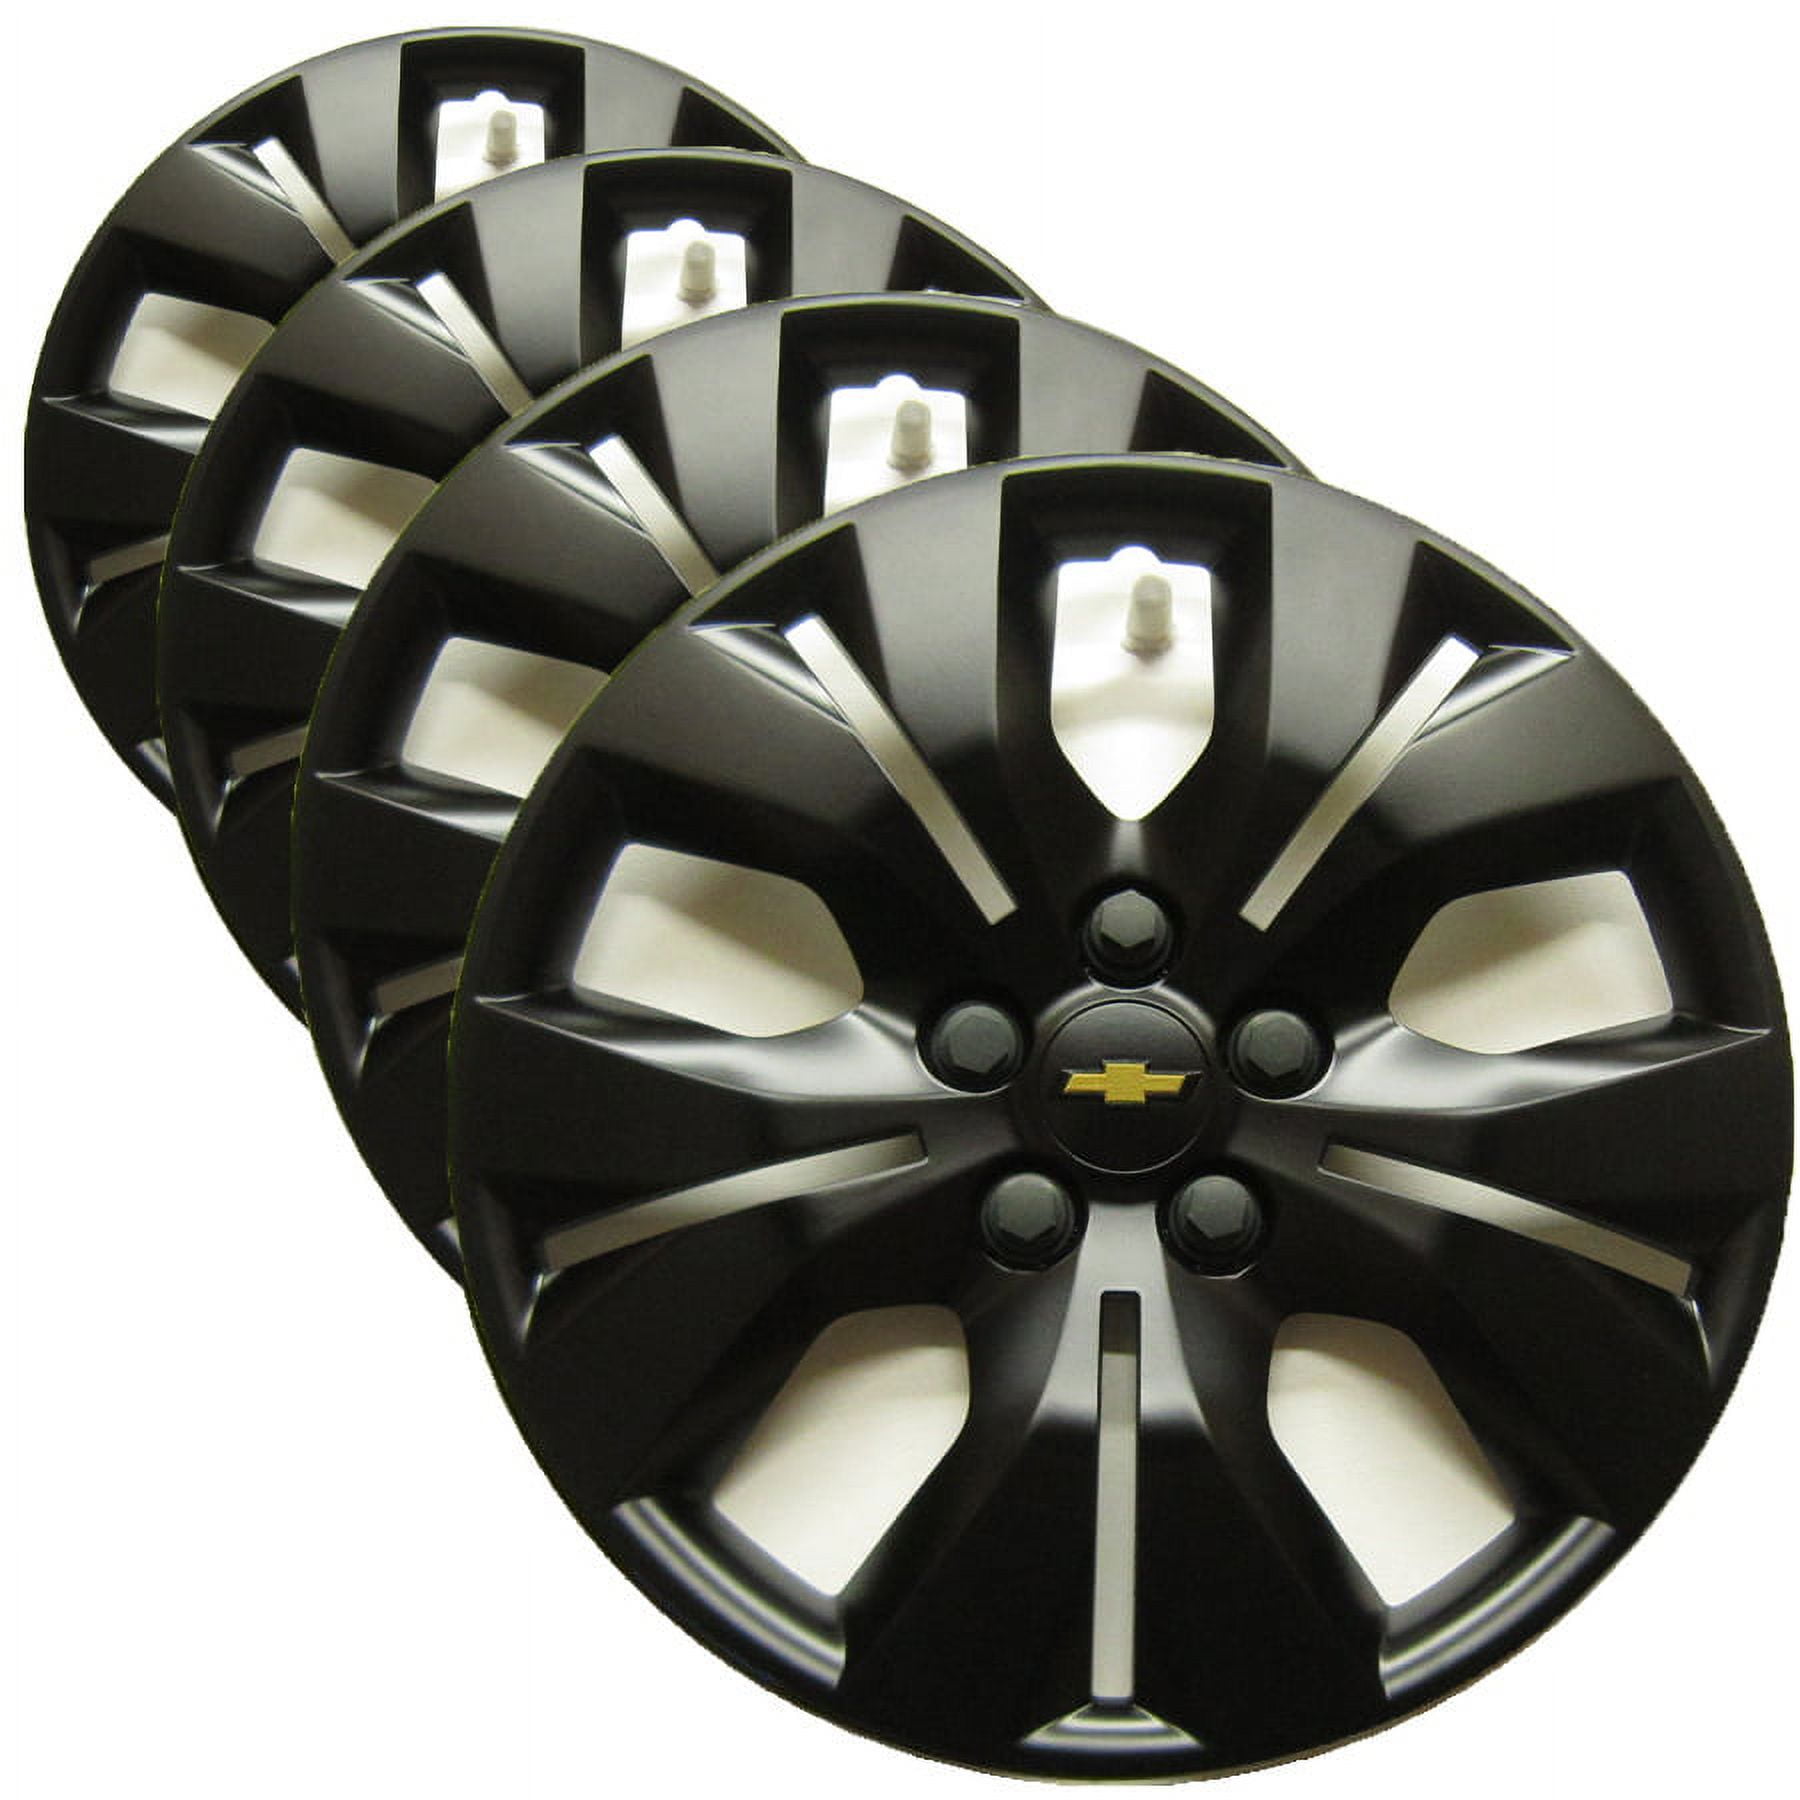 Hubcap Set fits Chevrolet Cruze 2011-2016, 16-inch Factory Wheel Covers, Custom Matte Black Paint (Set of 4) - image 1 of 5